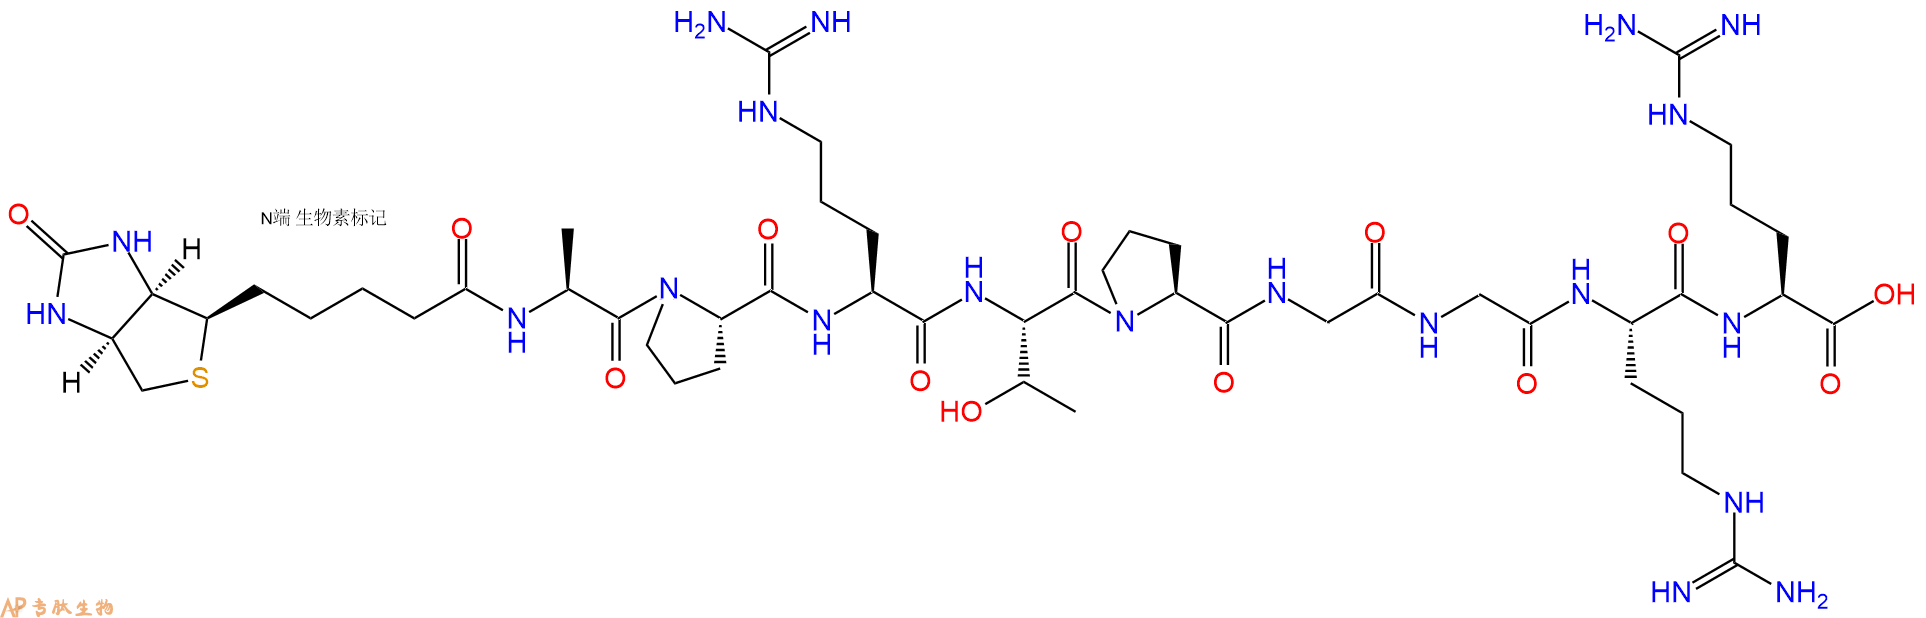 专肽生物产品Biotin-MyelinBasic Protein , MAPKSubstrate